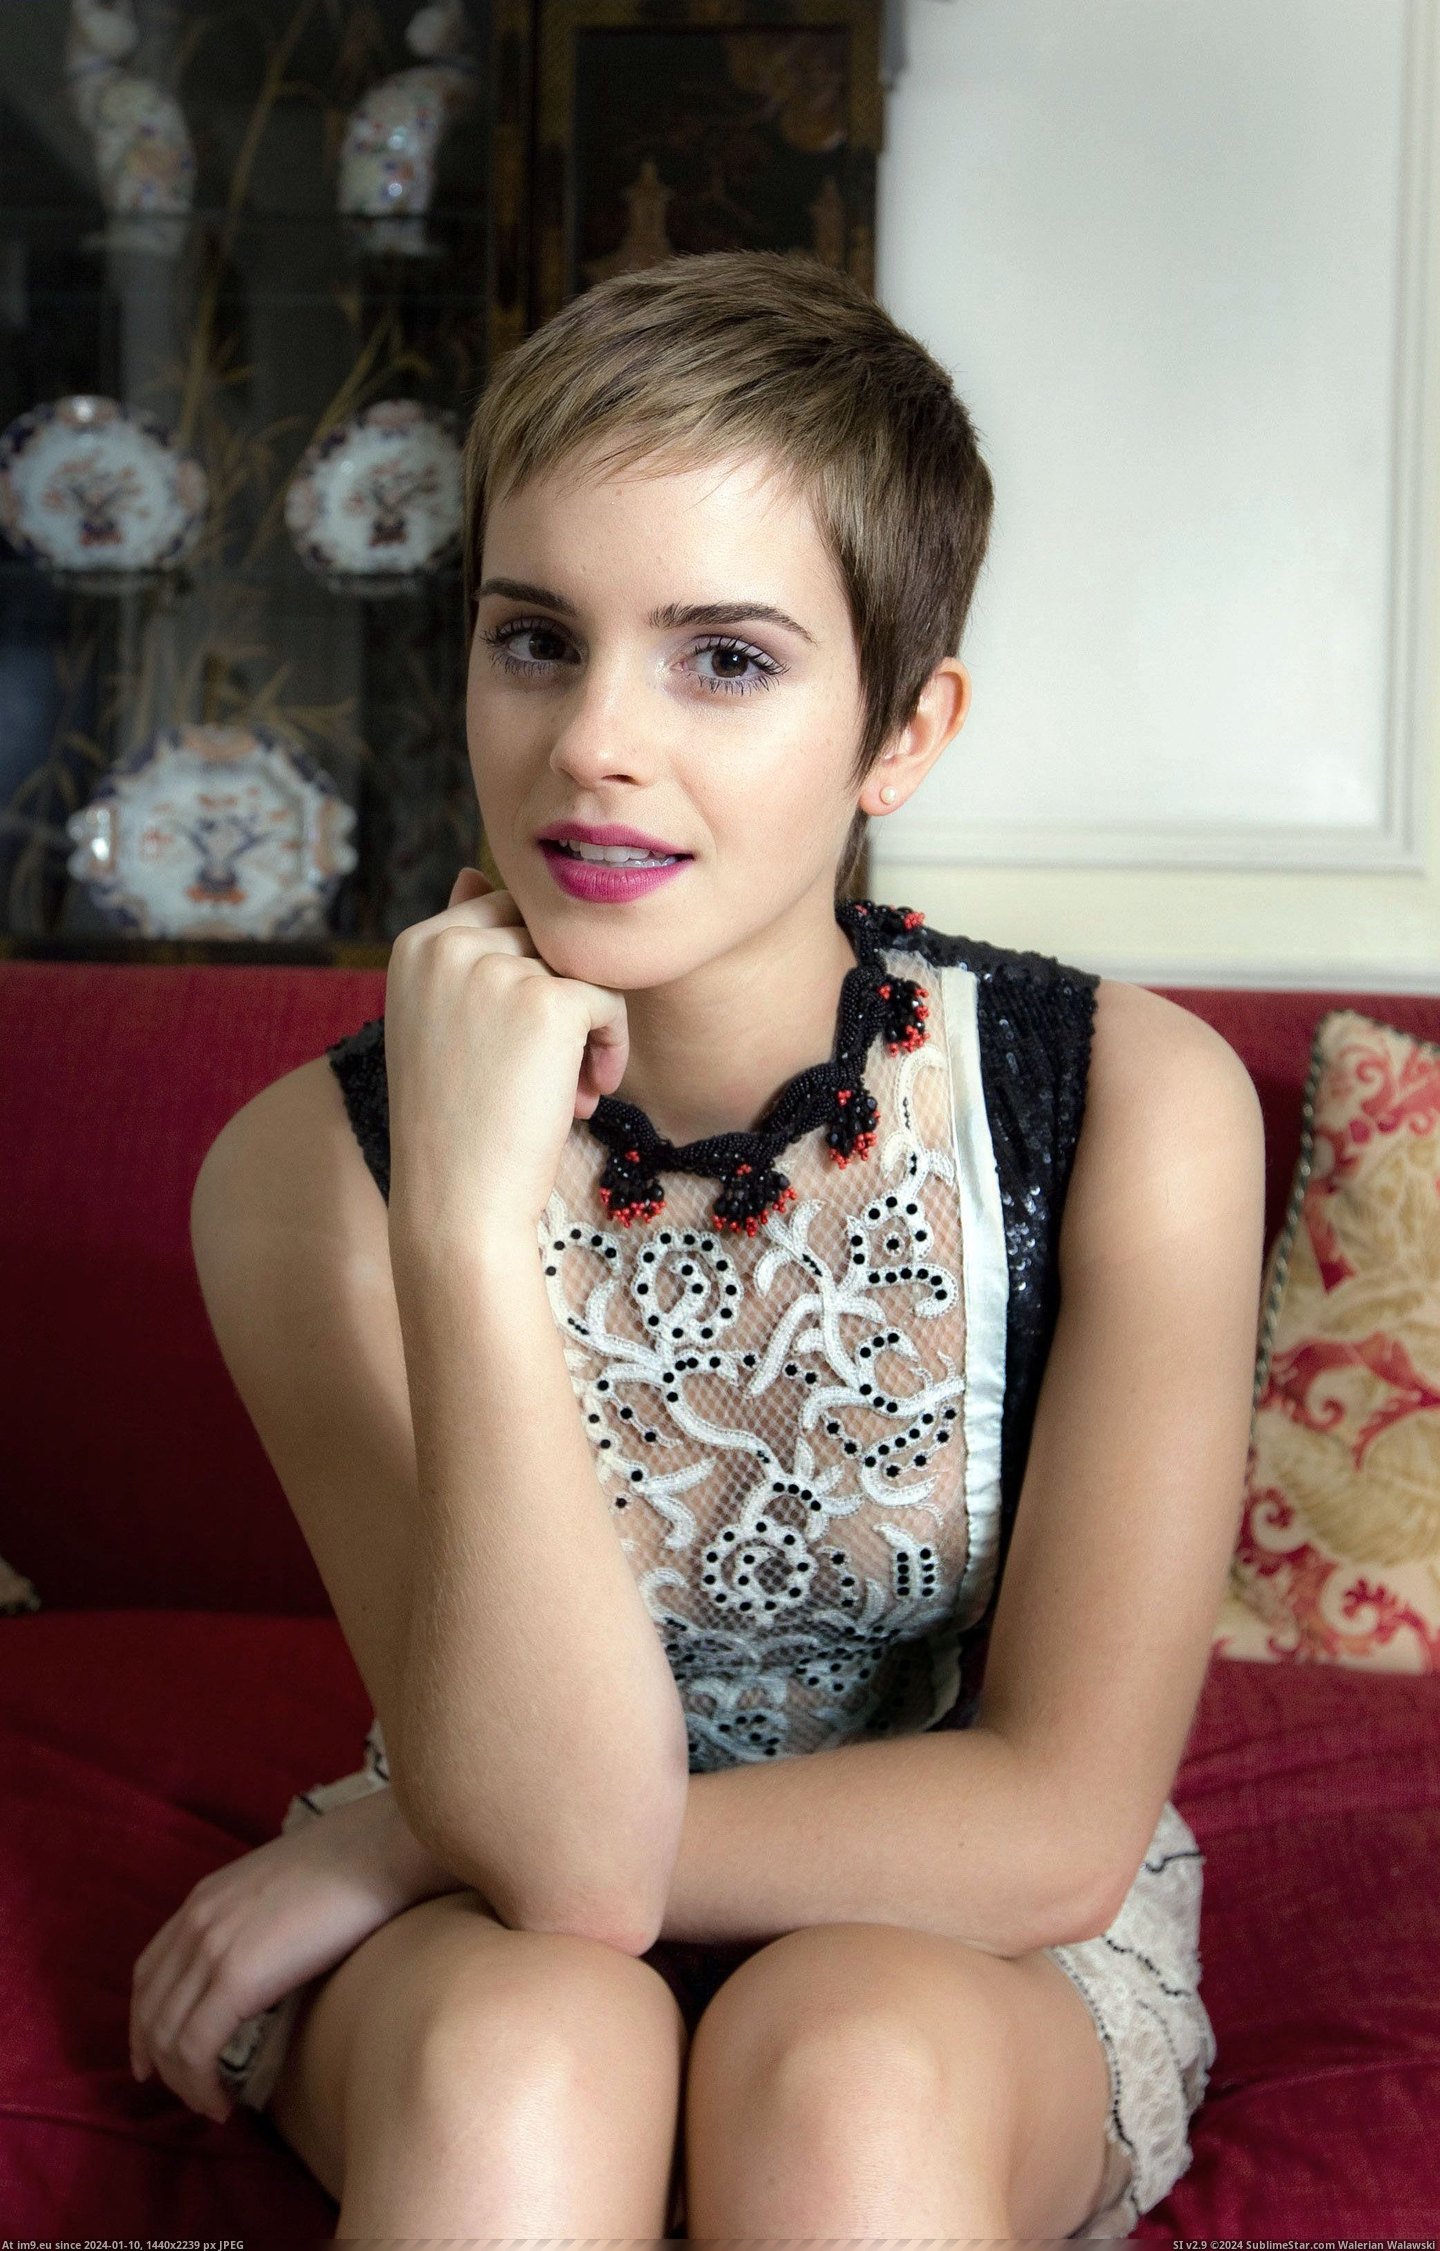 #Photo #Emma #Nip #Owgjxj2 #Watson #Slip Emma Watson Nip Slip Owgjxj2 (emma photo) Pic. (Image of album Emma Watson Photos))